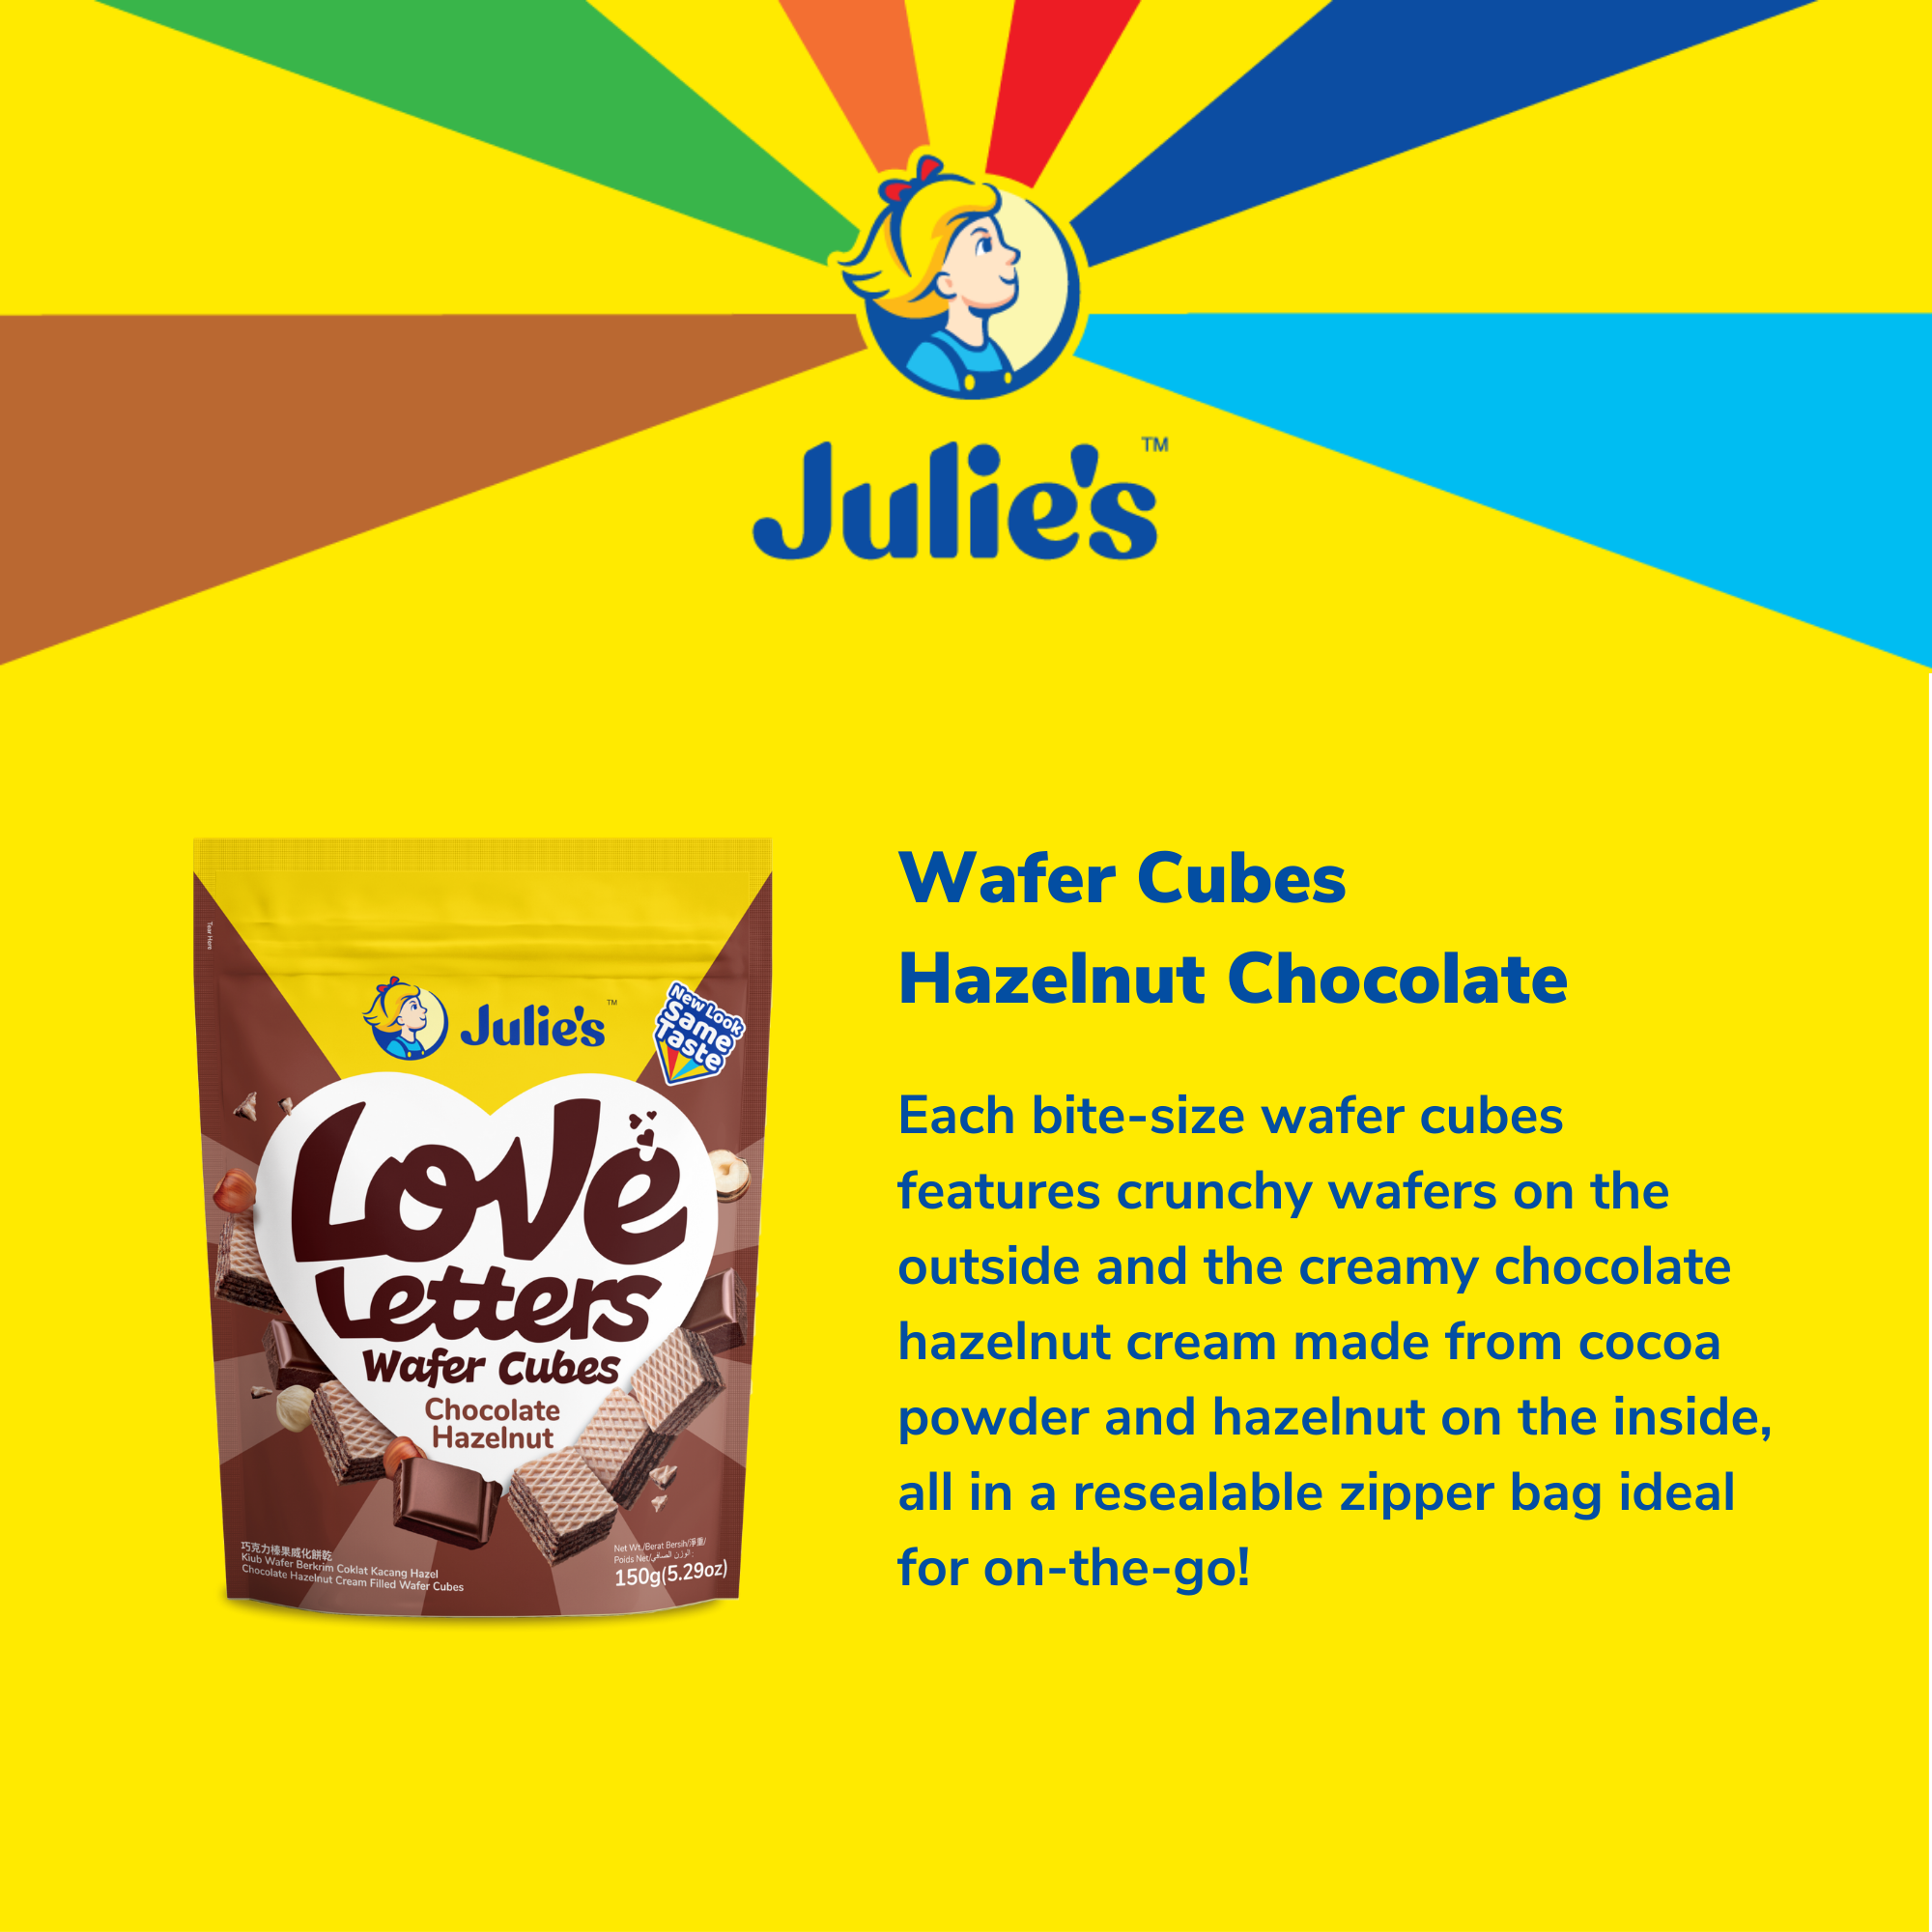 Julie's Love Letters Wafer Cubes Chocolate Hazelnut 150g x 2 packs